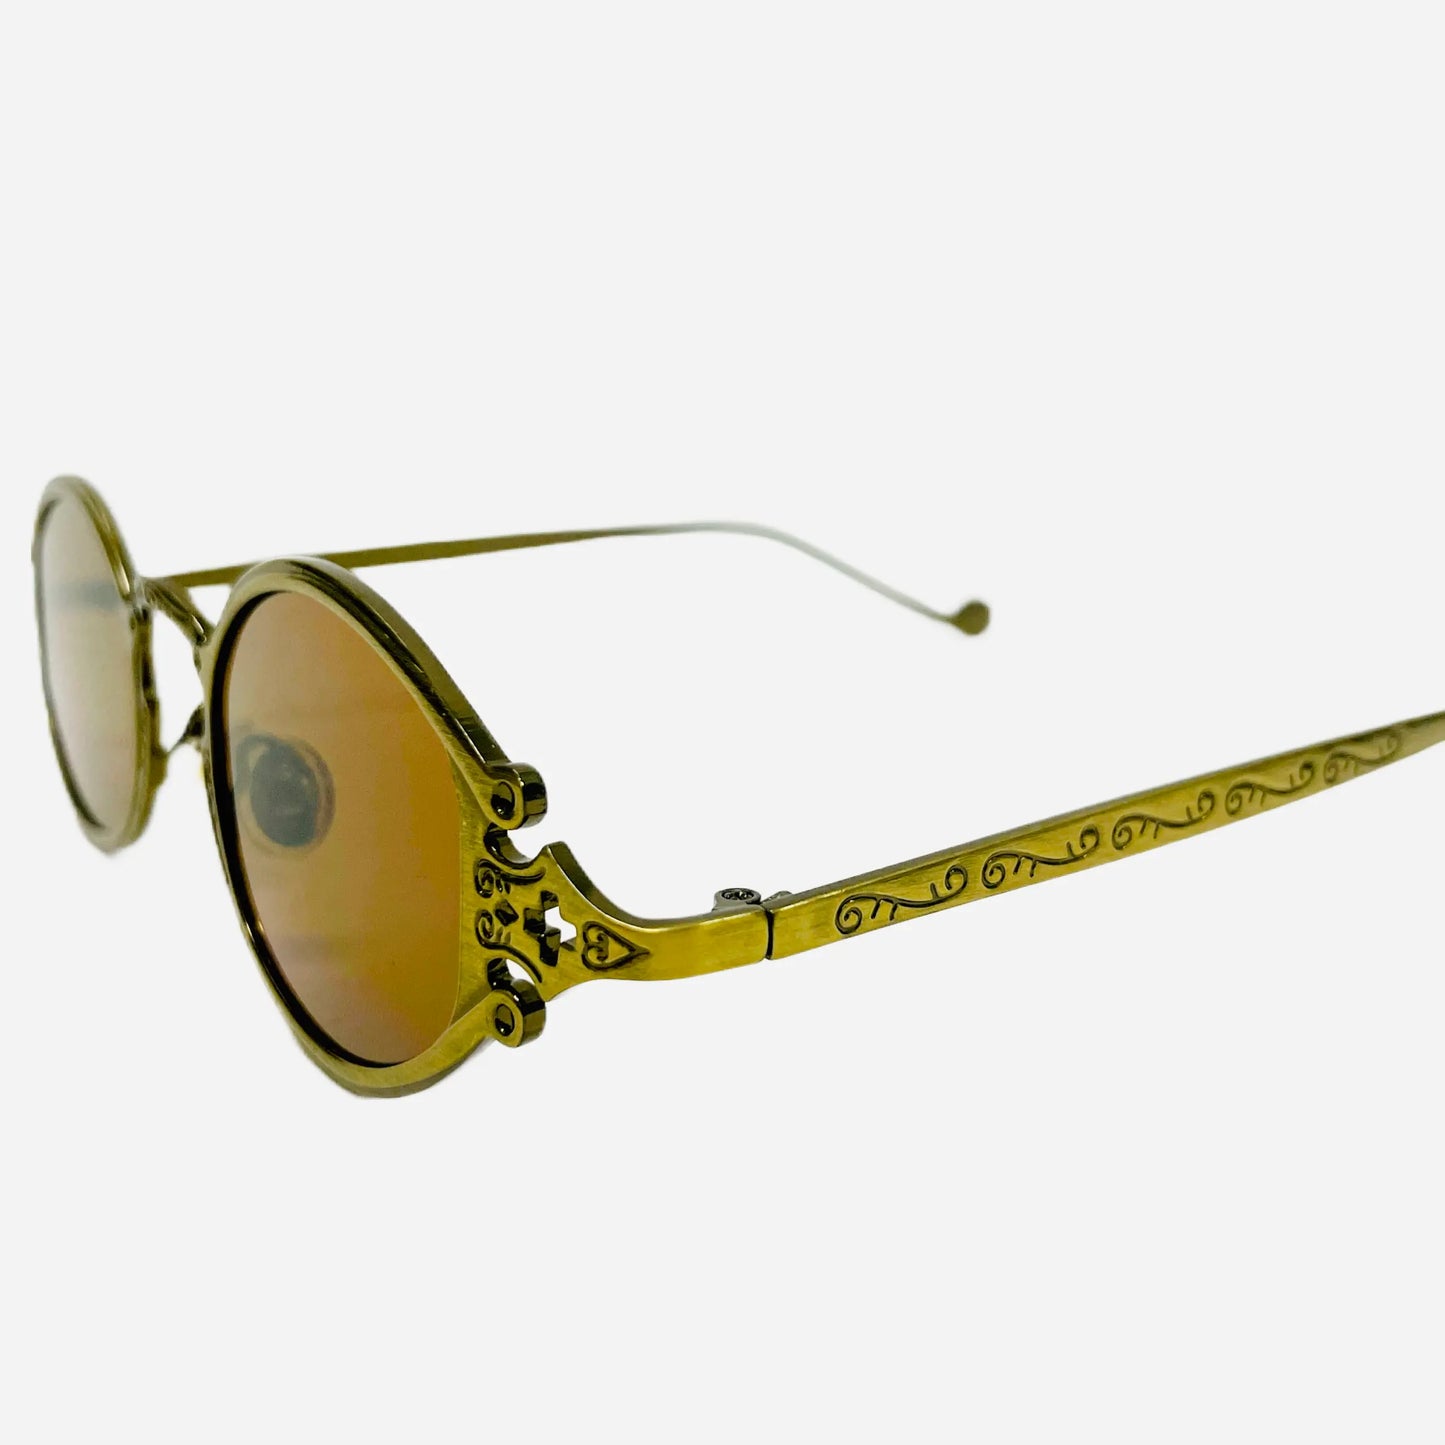 Vintage-Jean-Paul-Gaultier-Sonnenbrille-Sunglasses-Model-56-0001-bronze-side